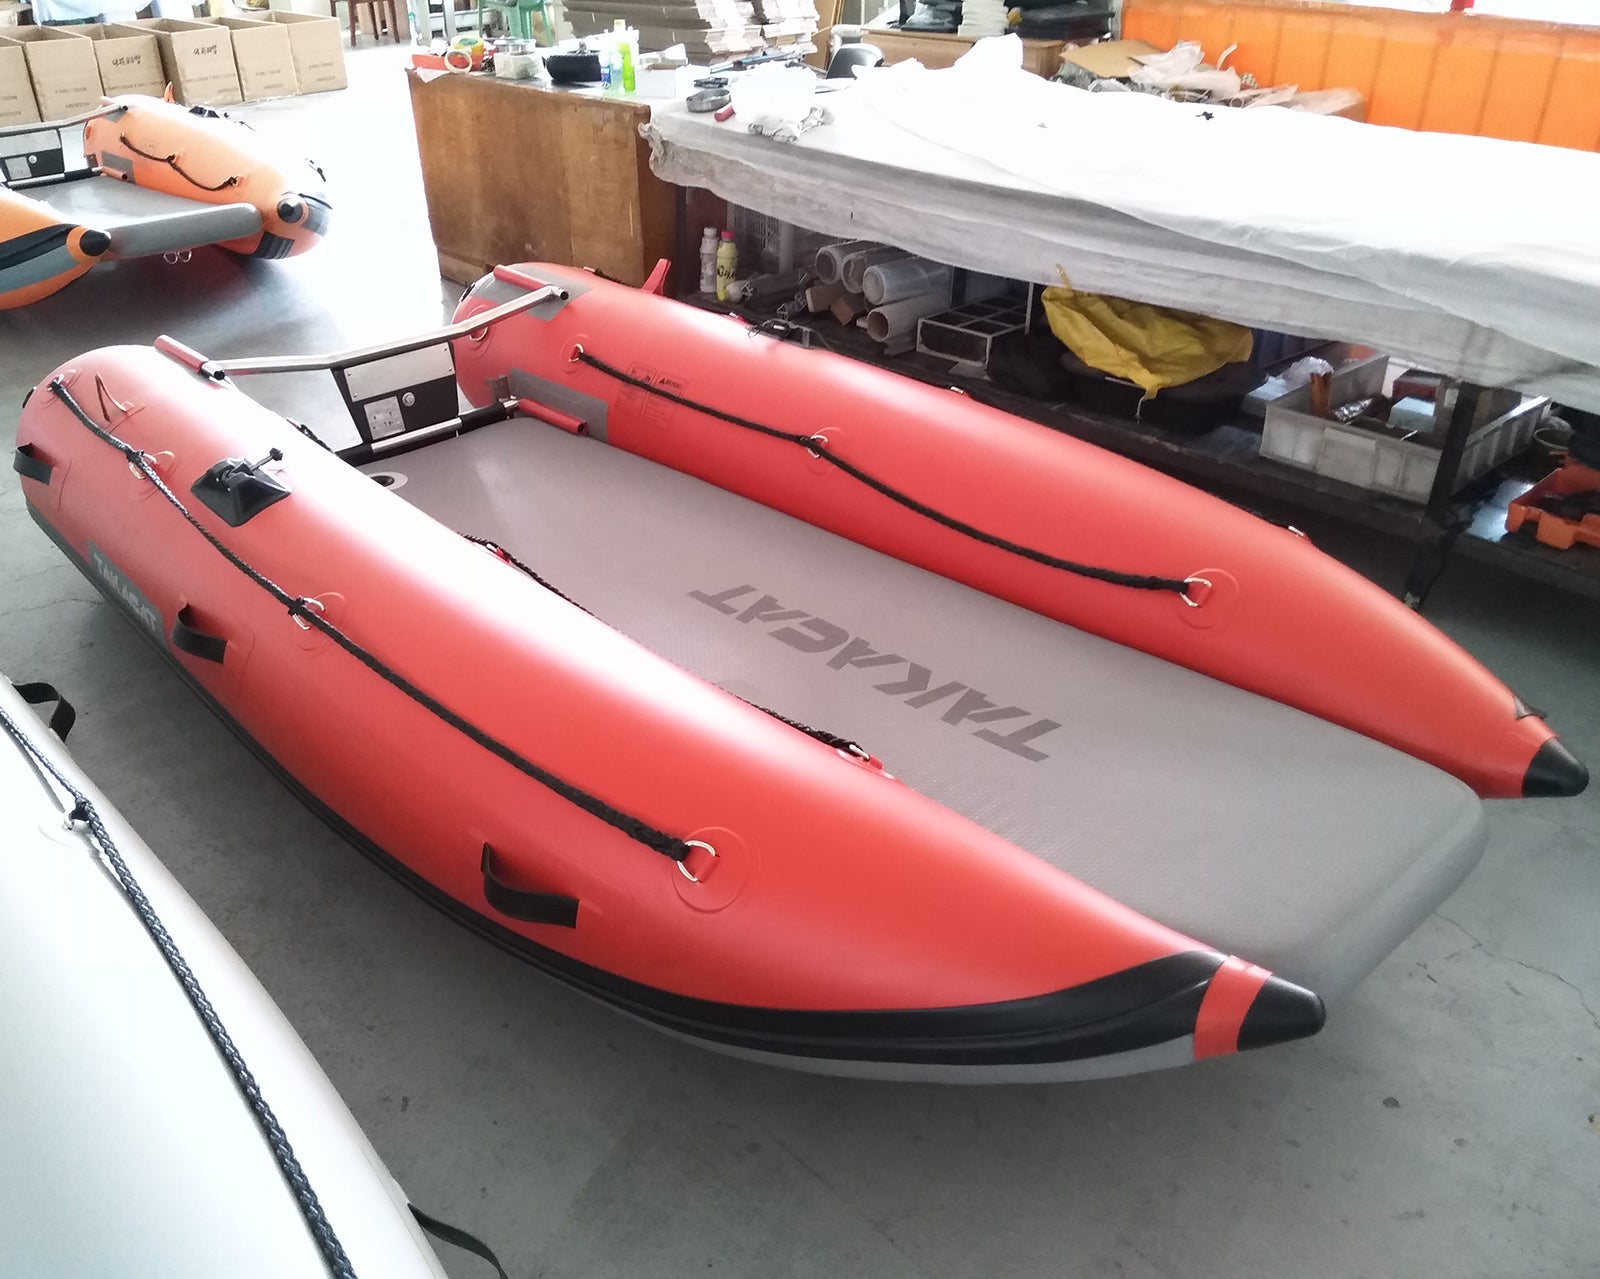 Takacat 260 LX Inflatable Catamaran